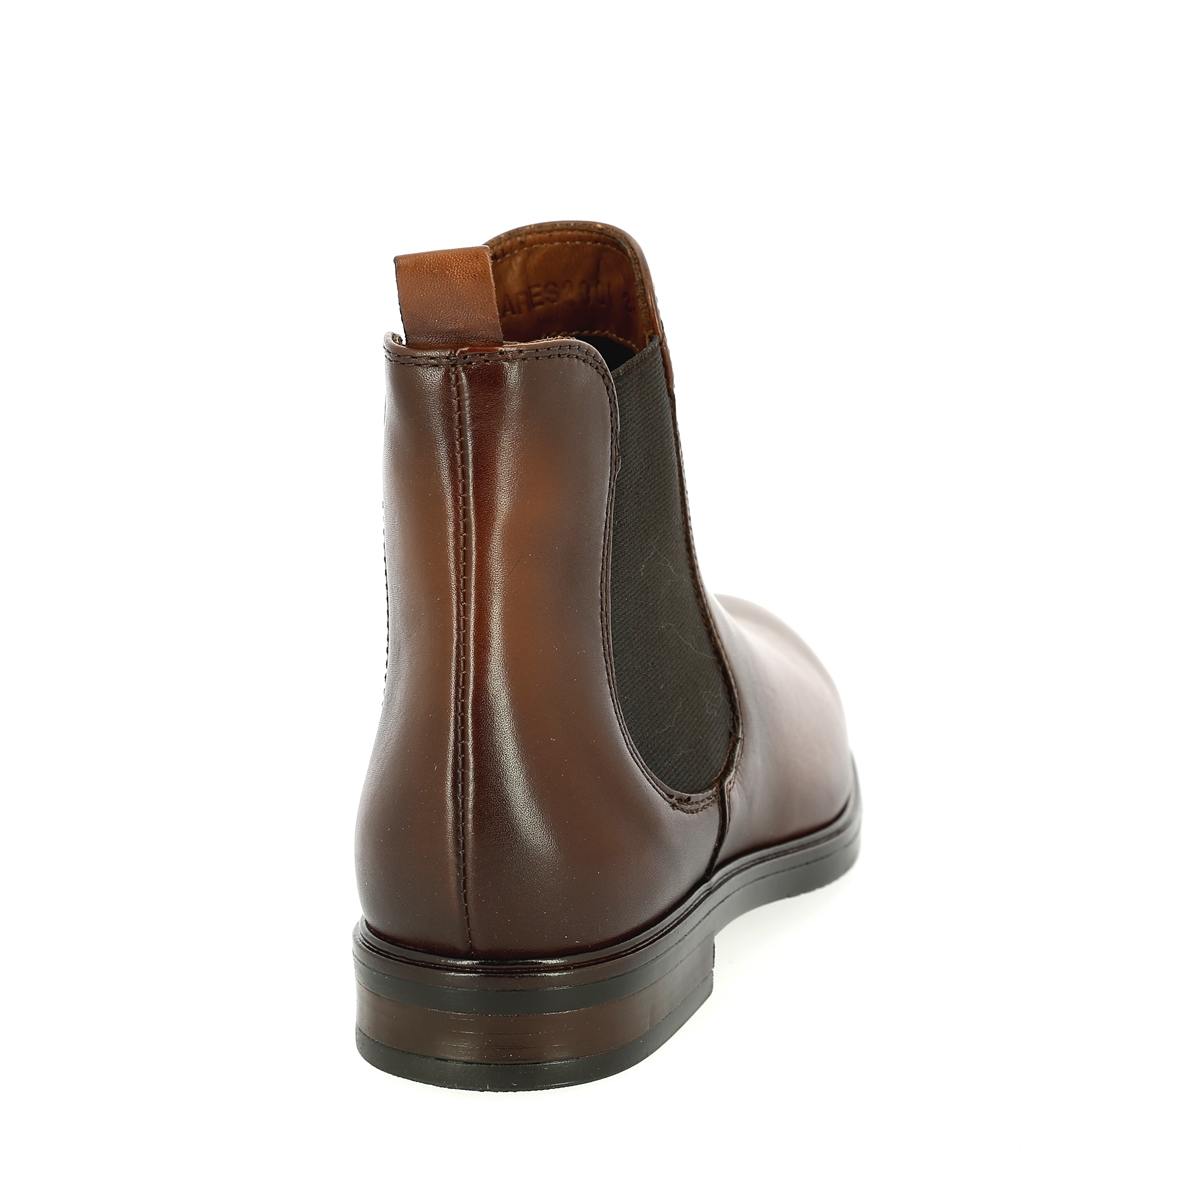 Gioia Boots brun